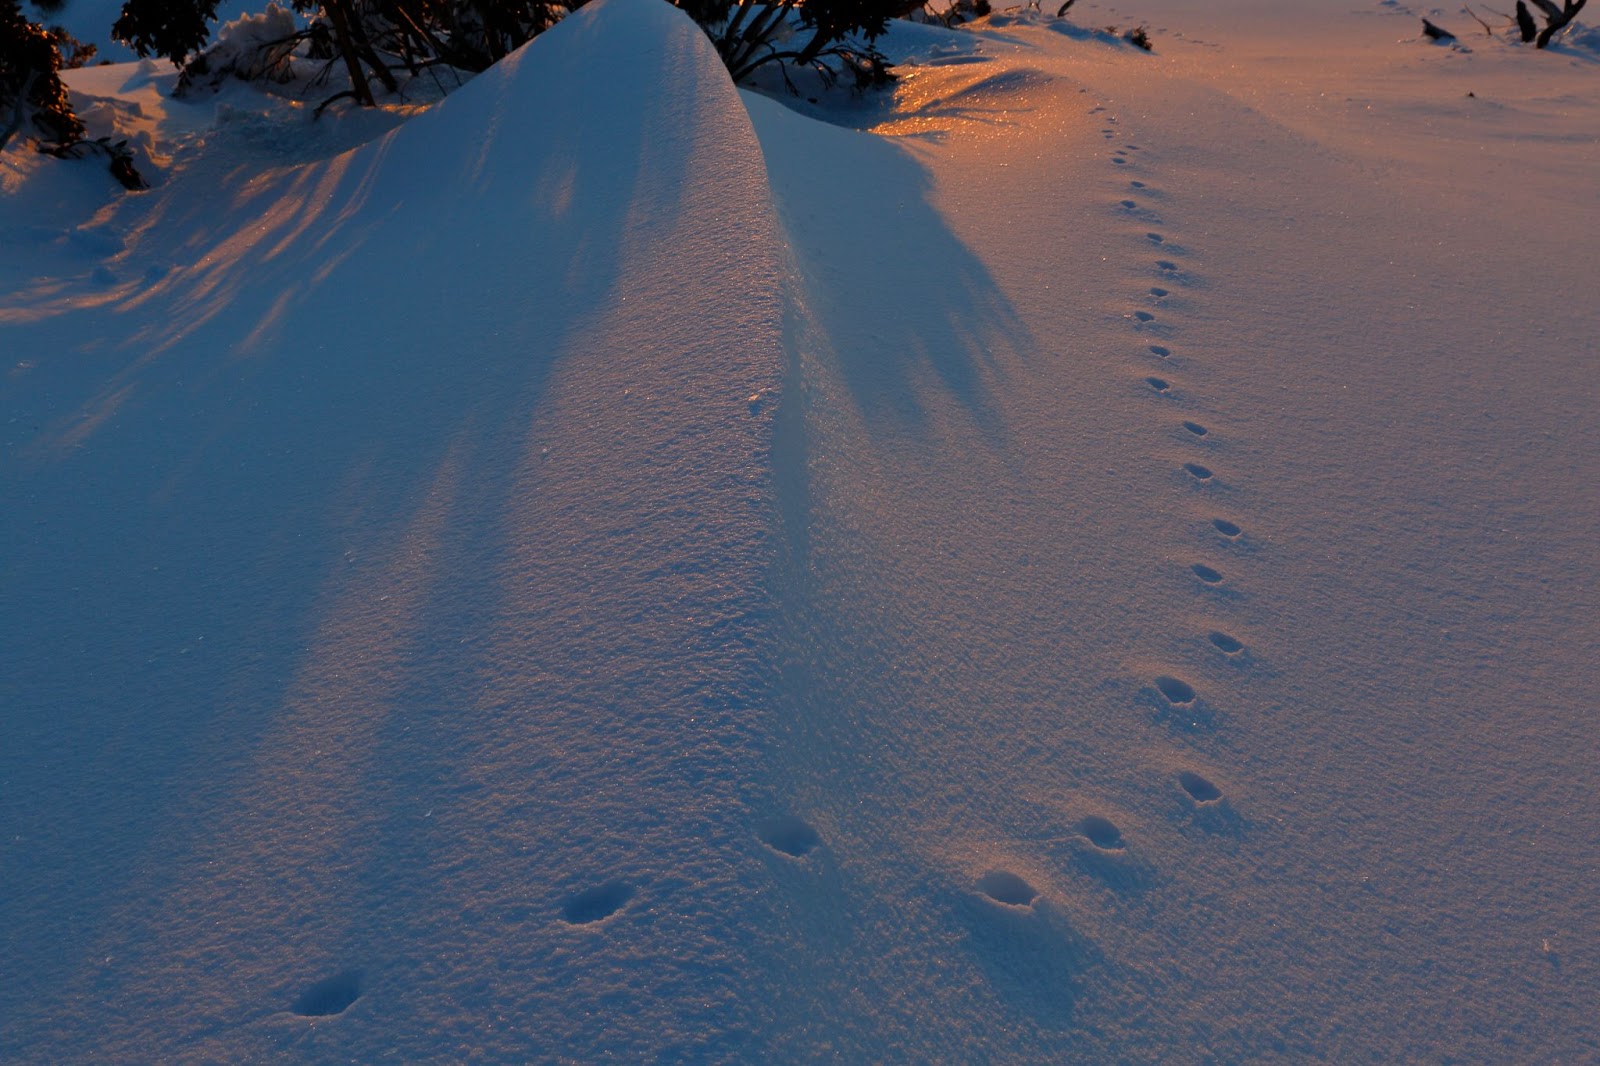 Fox tracks in the snow.